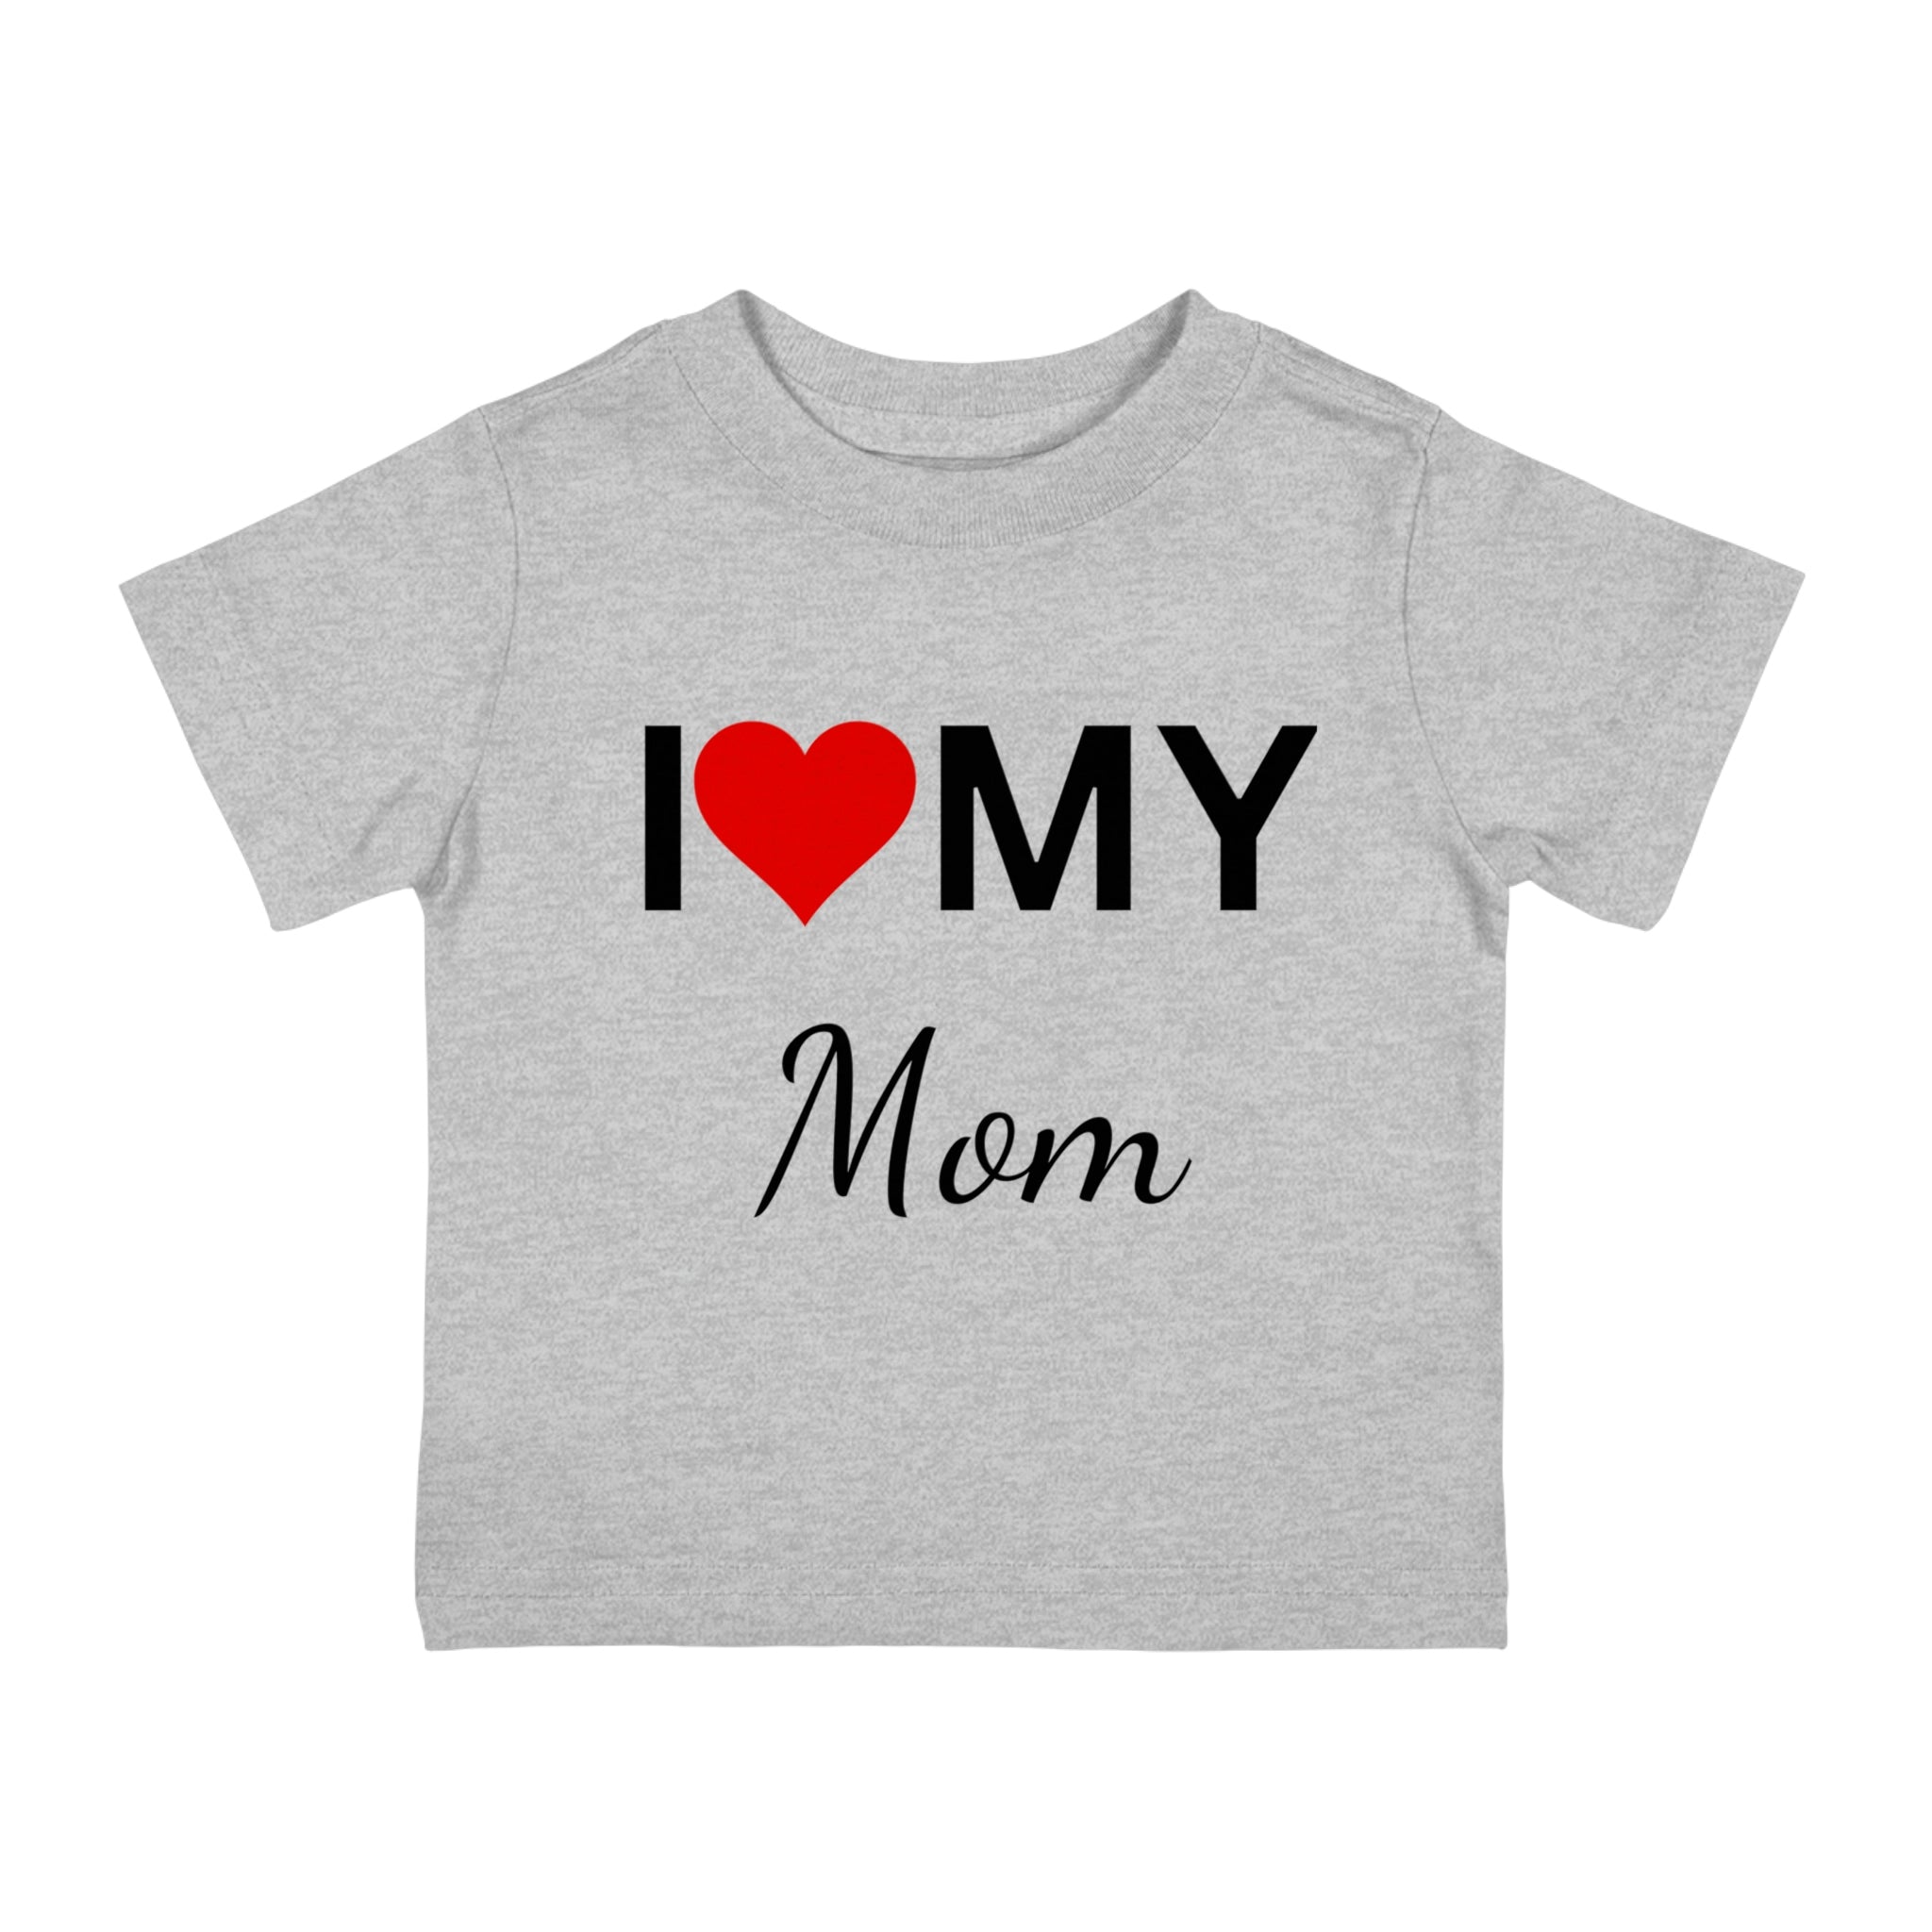 I Love My Mom Infant Shirt, Baby Tee, Infant Tee